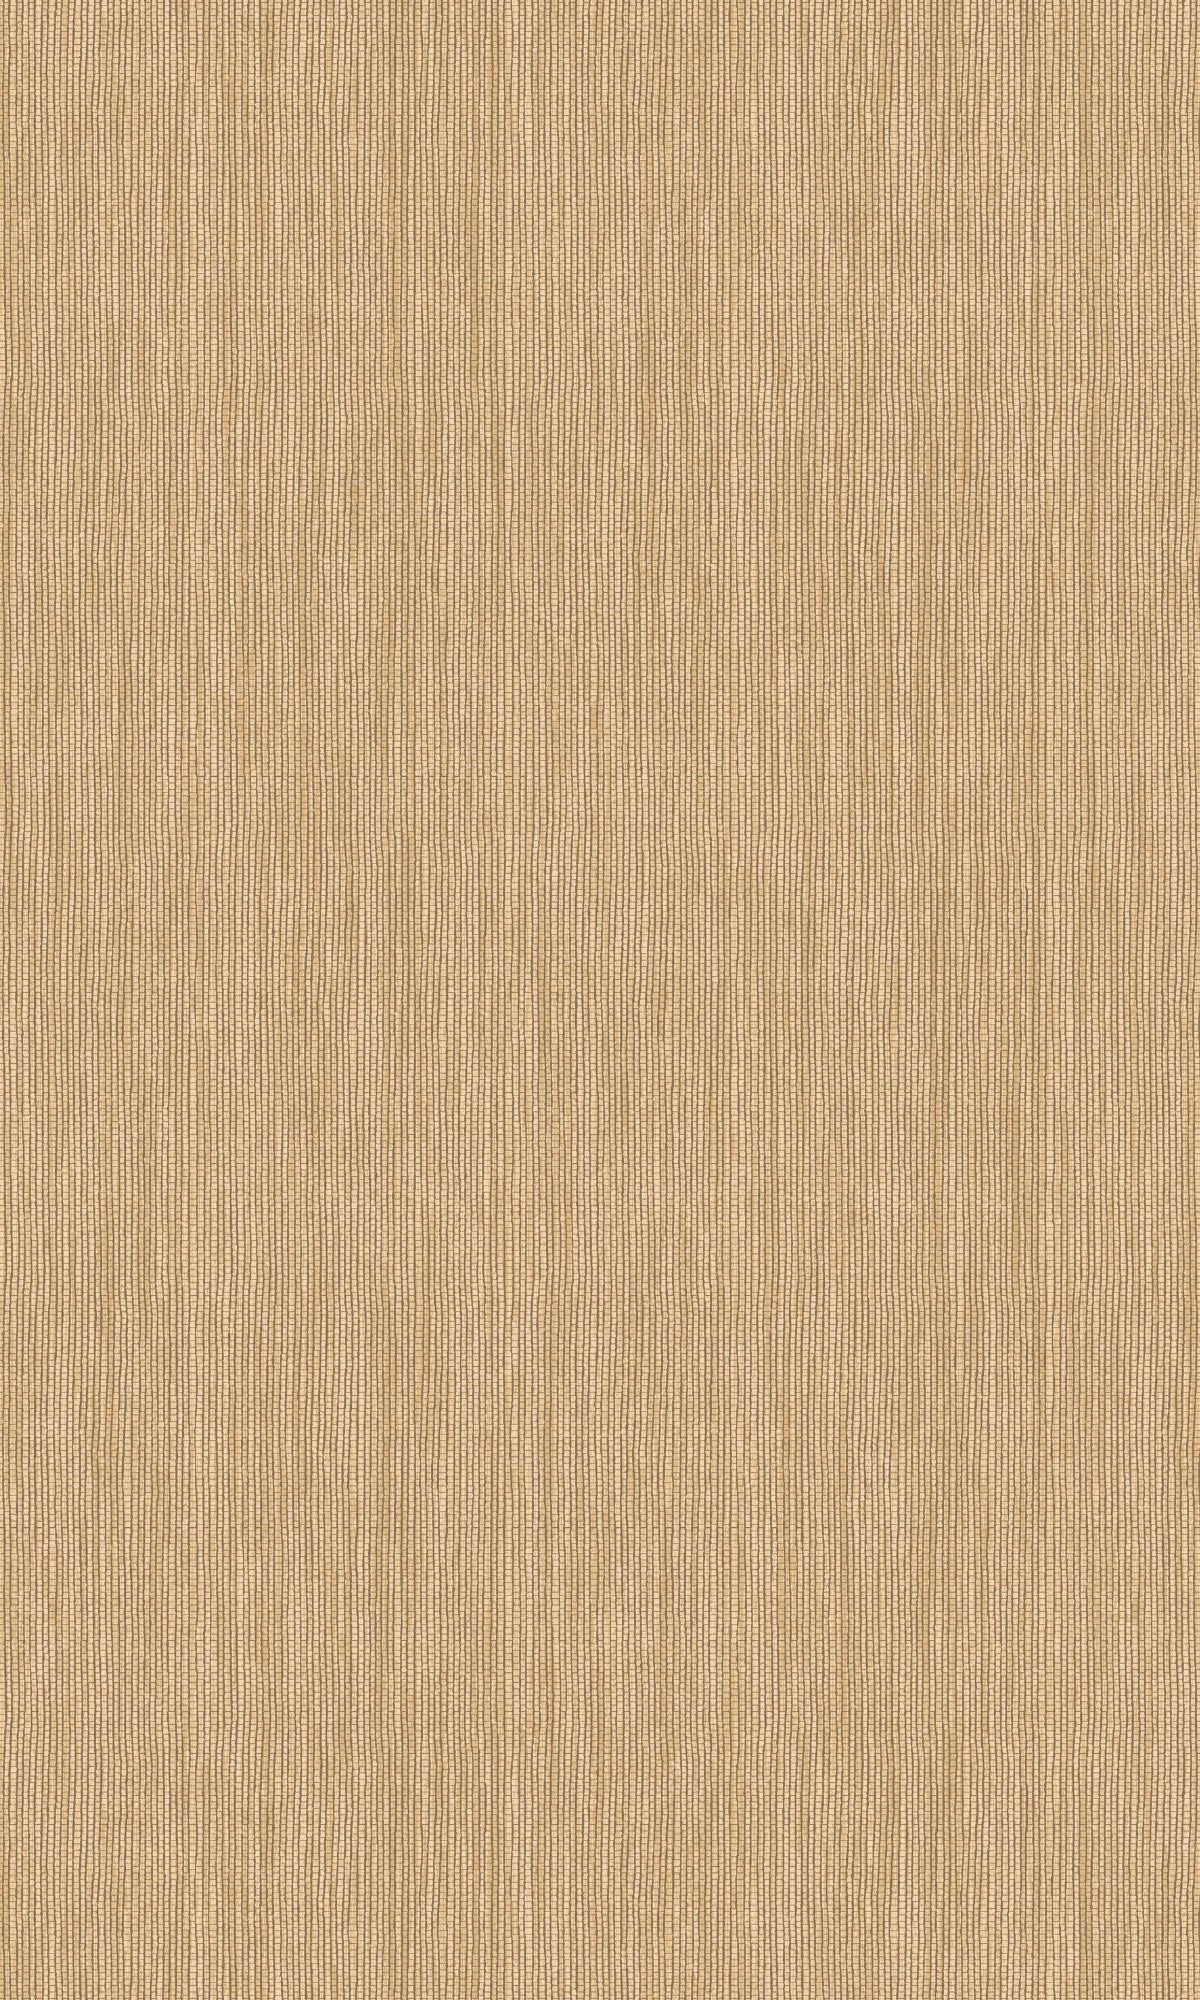 Camel Plain Textile Textured Wallpaper R9069